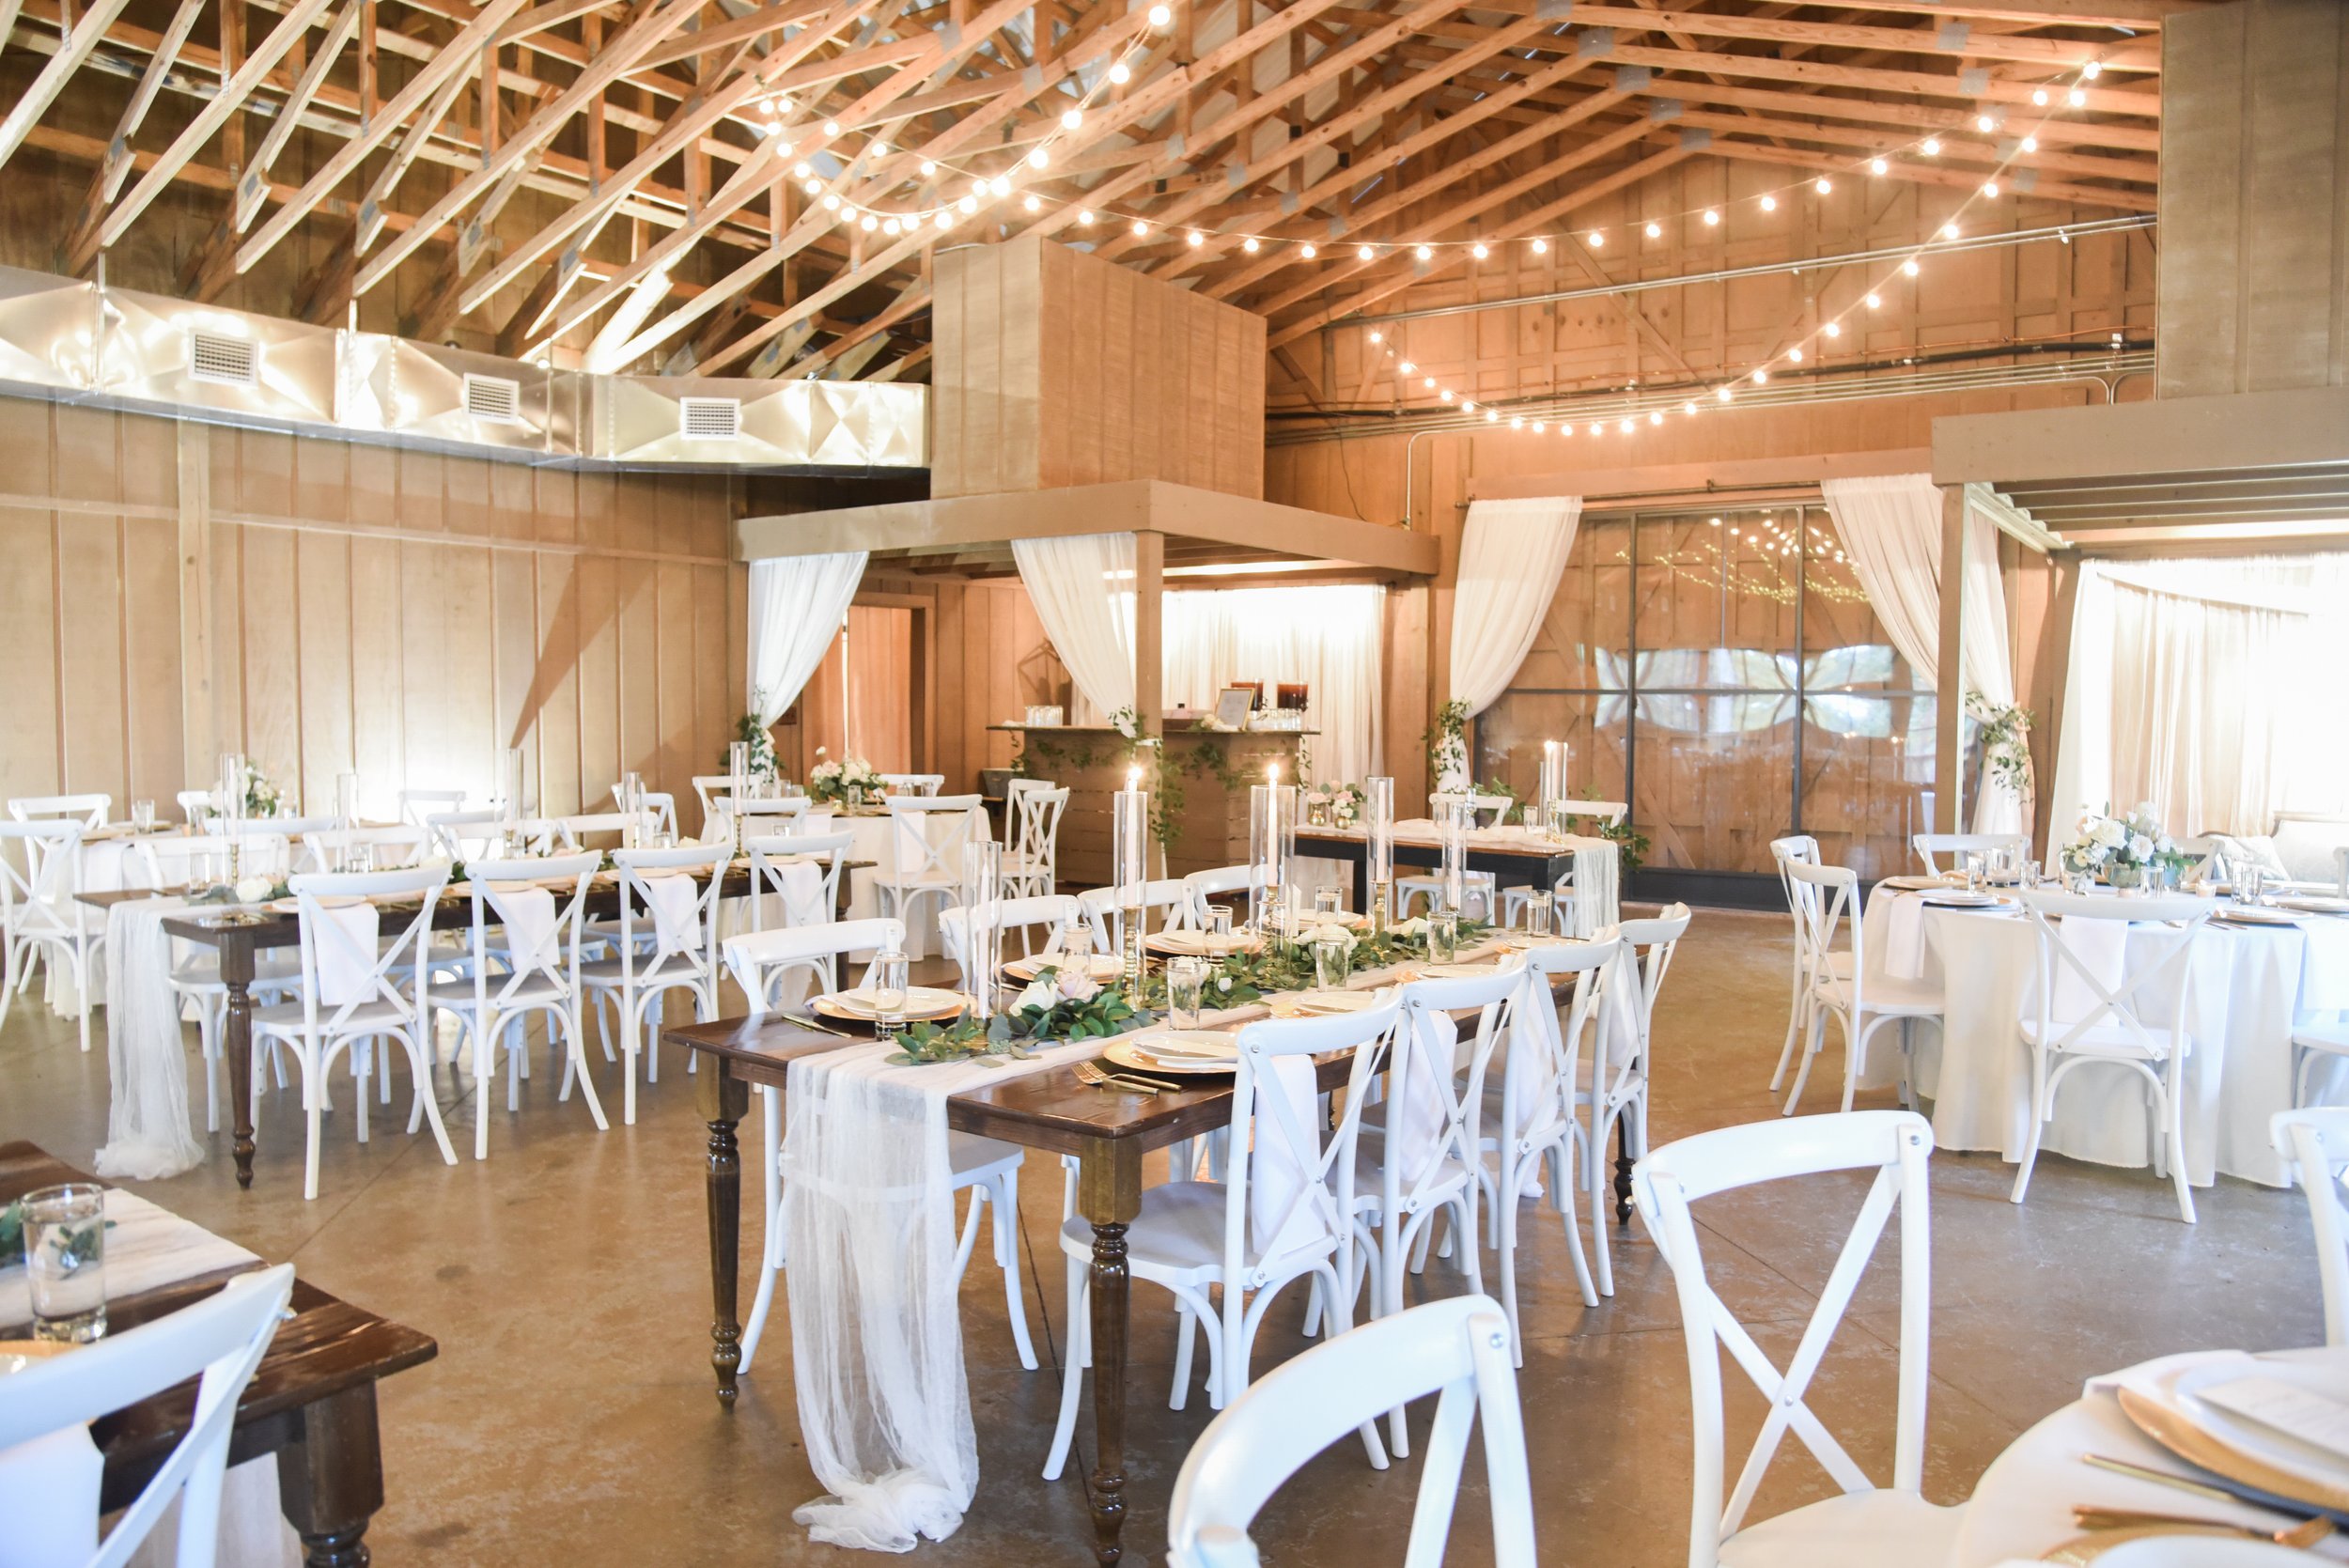  Elegant Farm Barn Indoor Wedding Venue Charlotte 